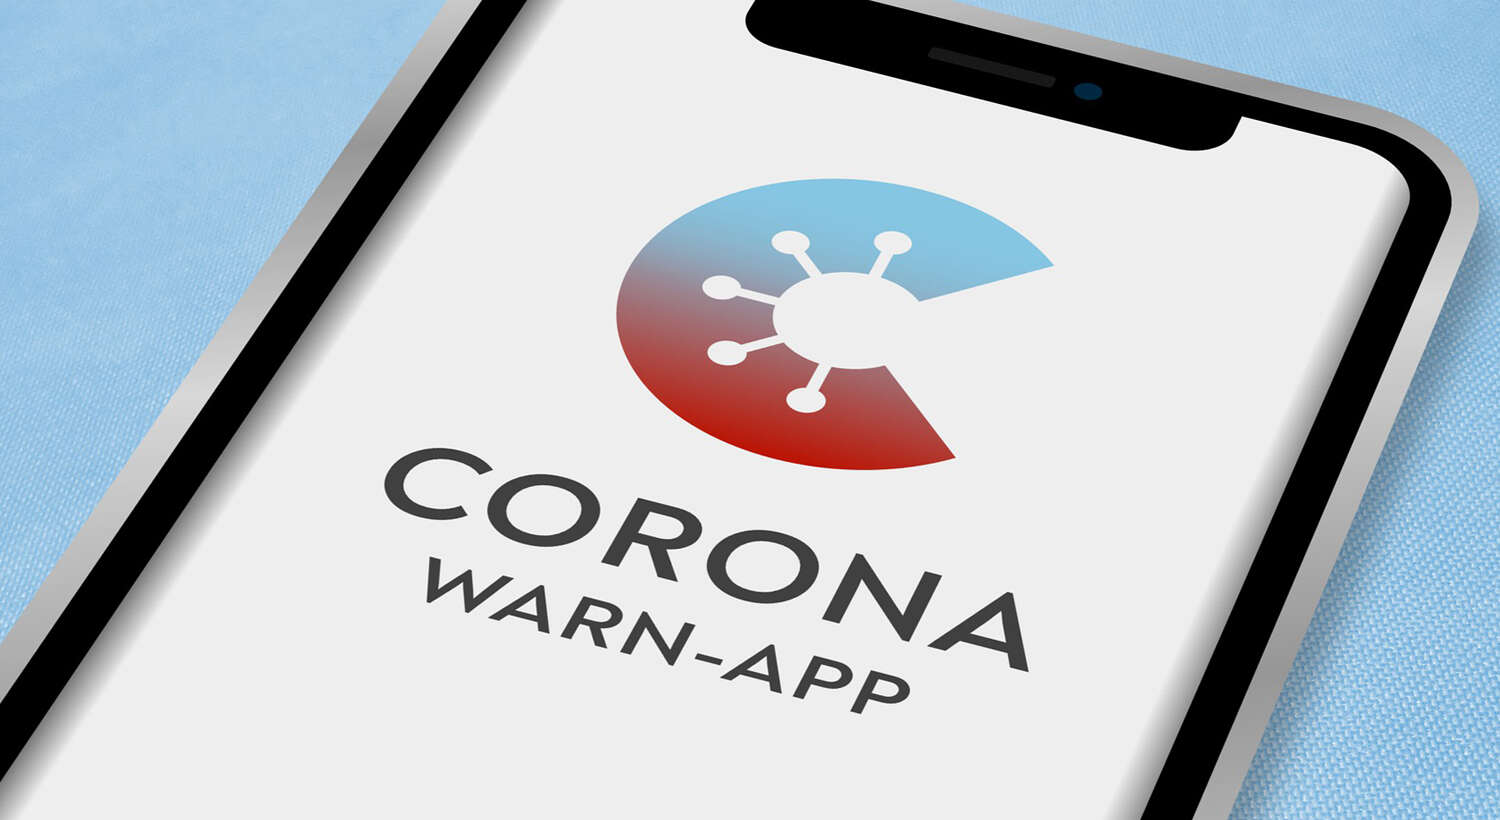 Corona-Warn-App XXL-Bühne